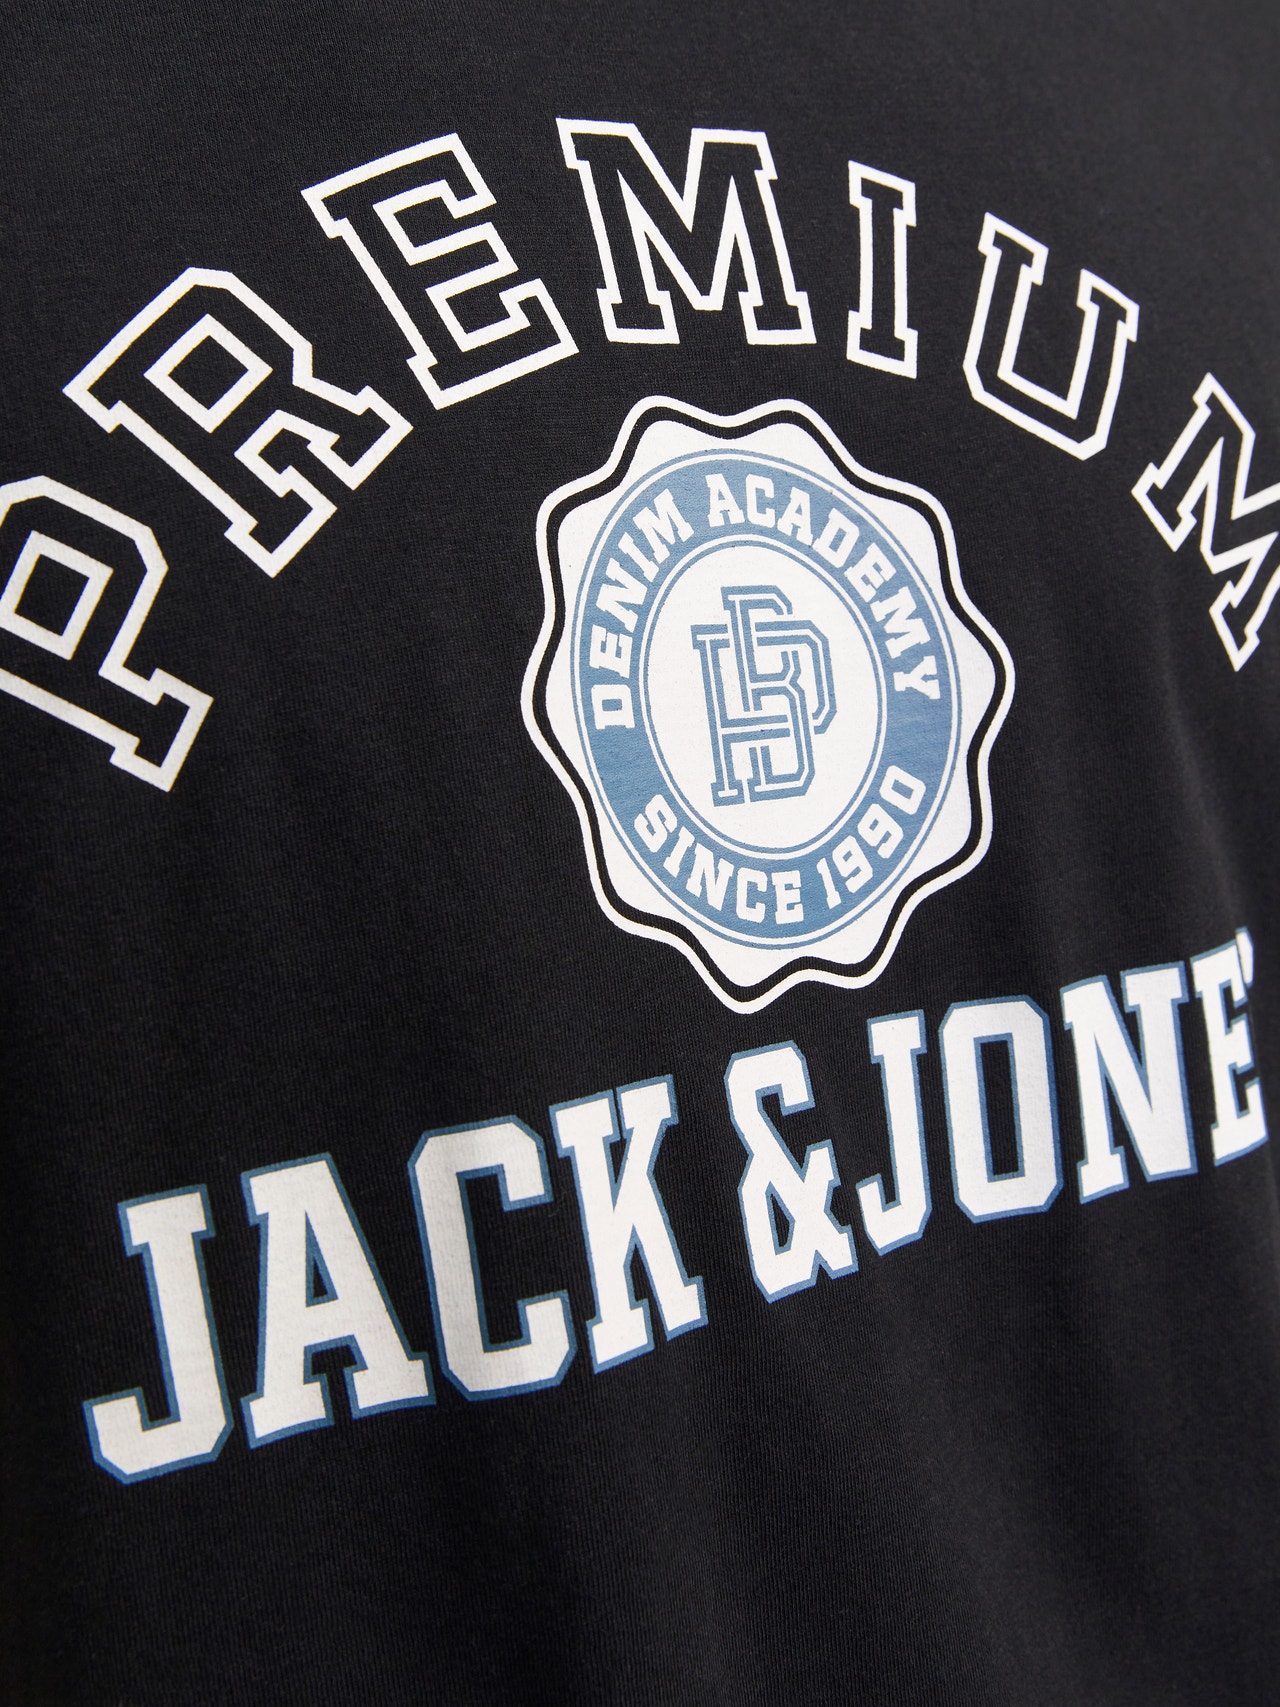 Jack & Jones T-shirt Estampar Decote Redondo -Black - 12255163